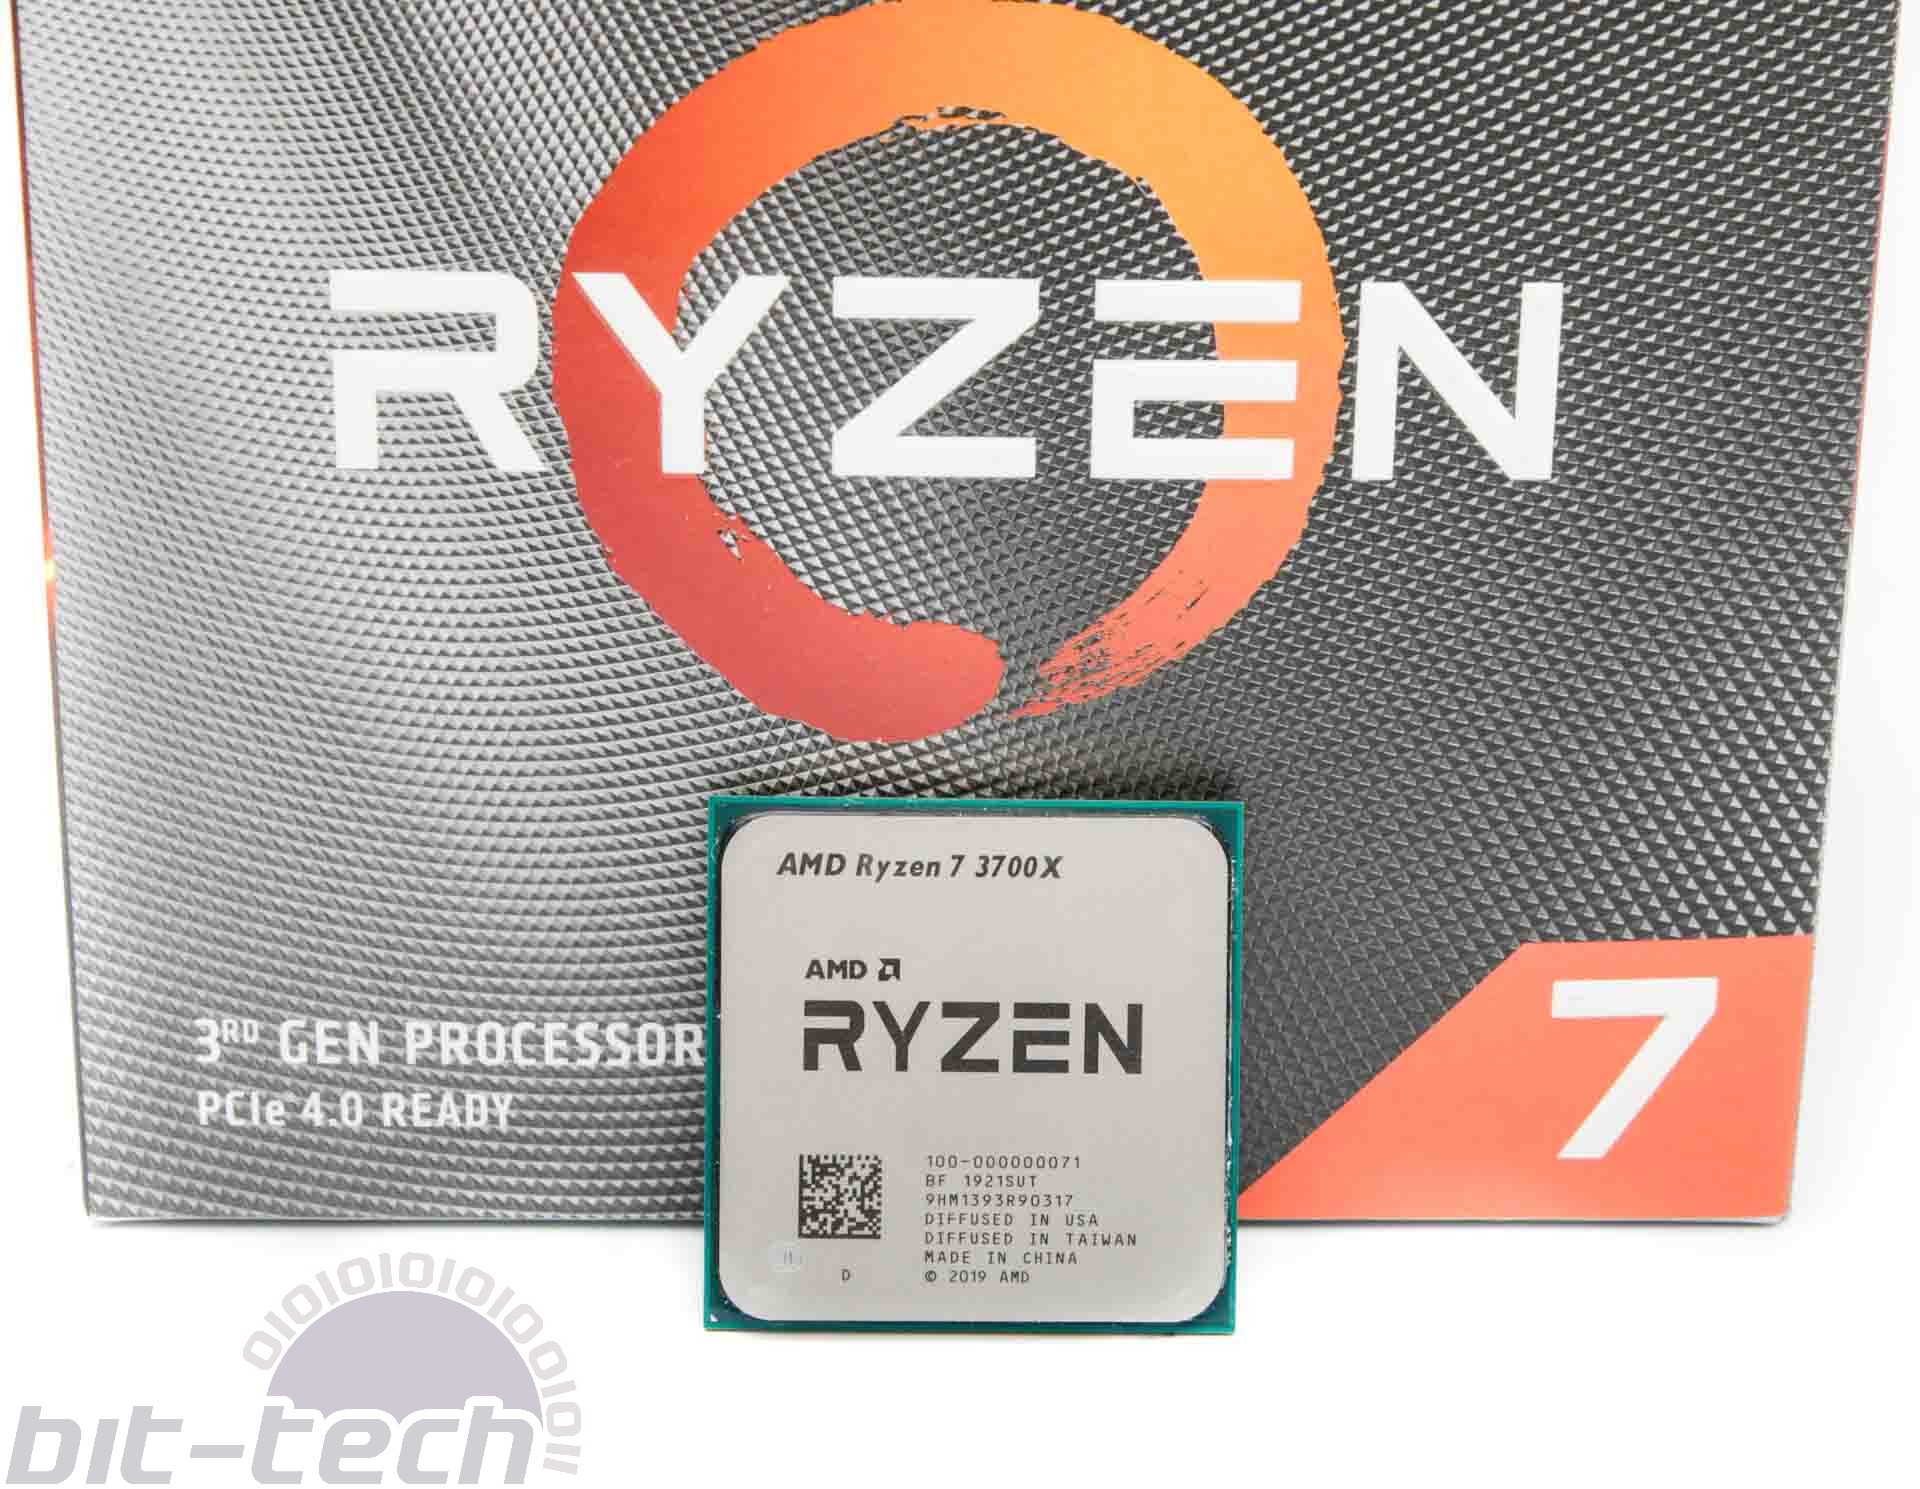 AMD Ryzen 7 3700X Review | bit-tech.net